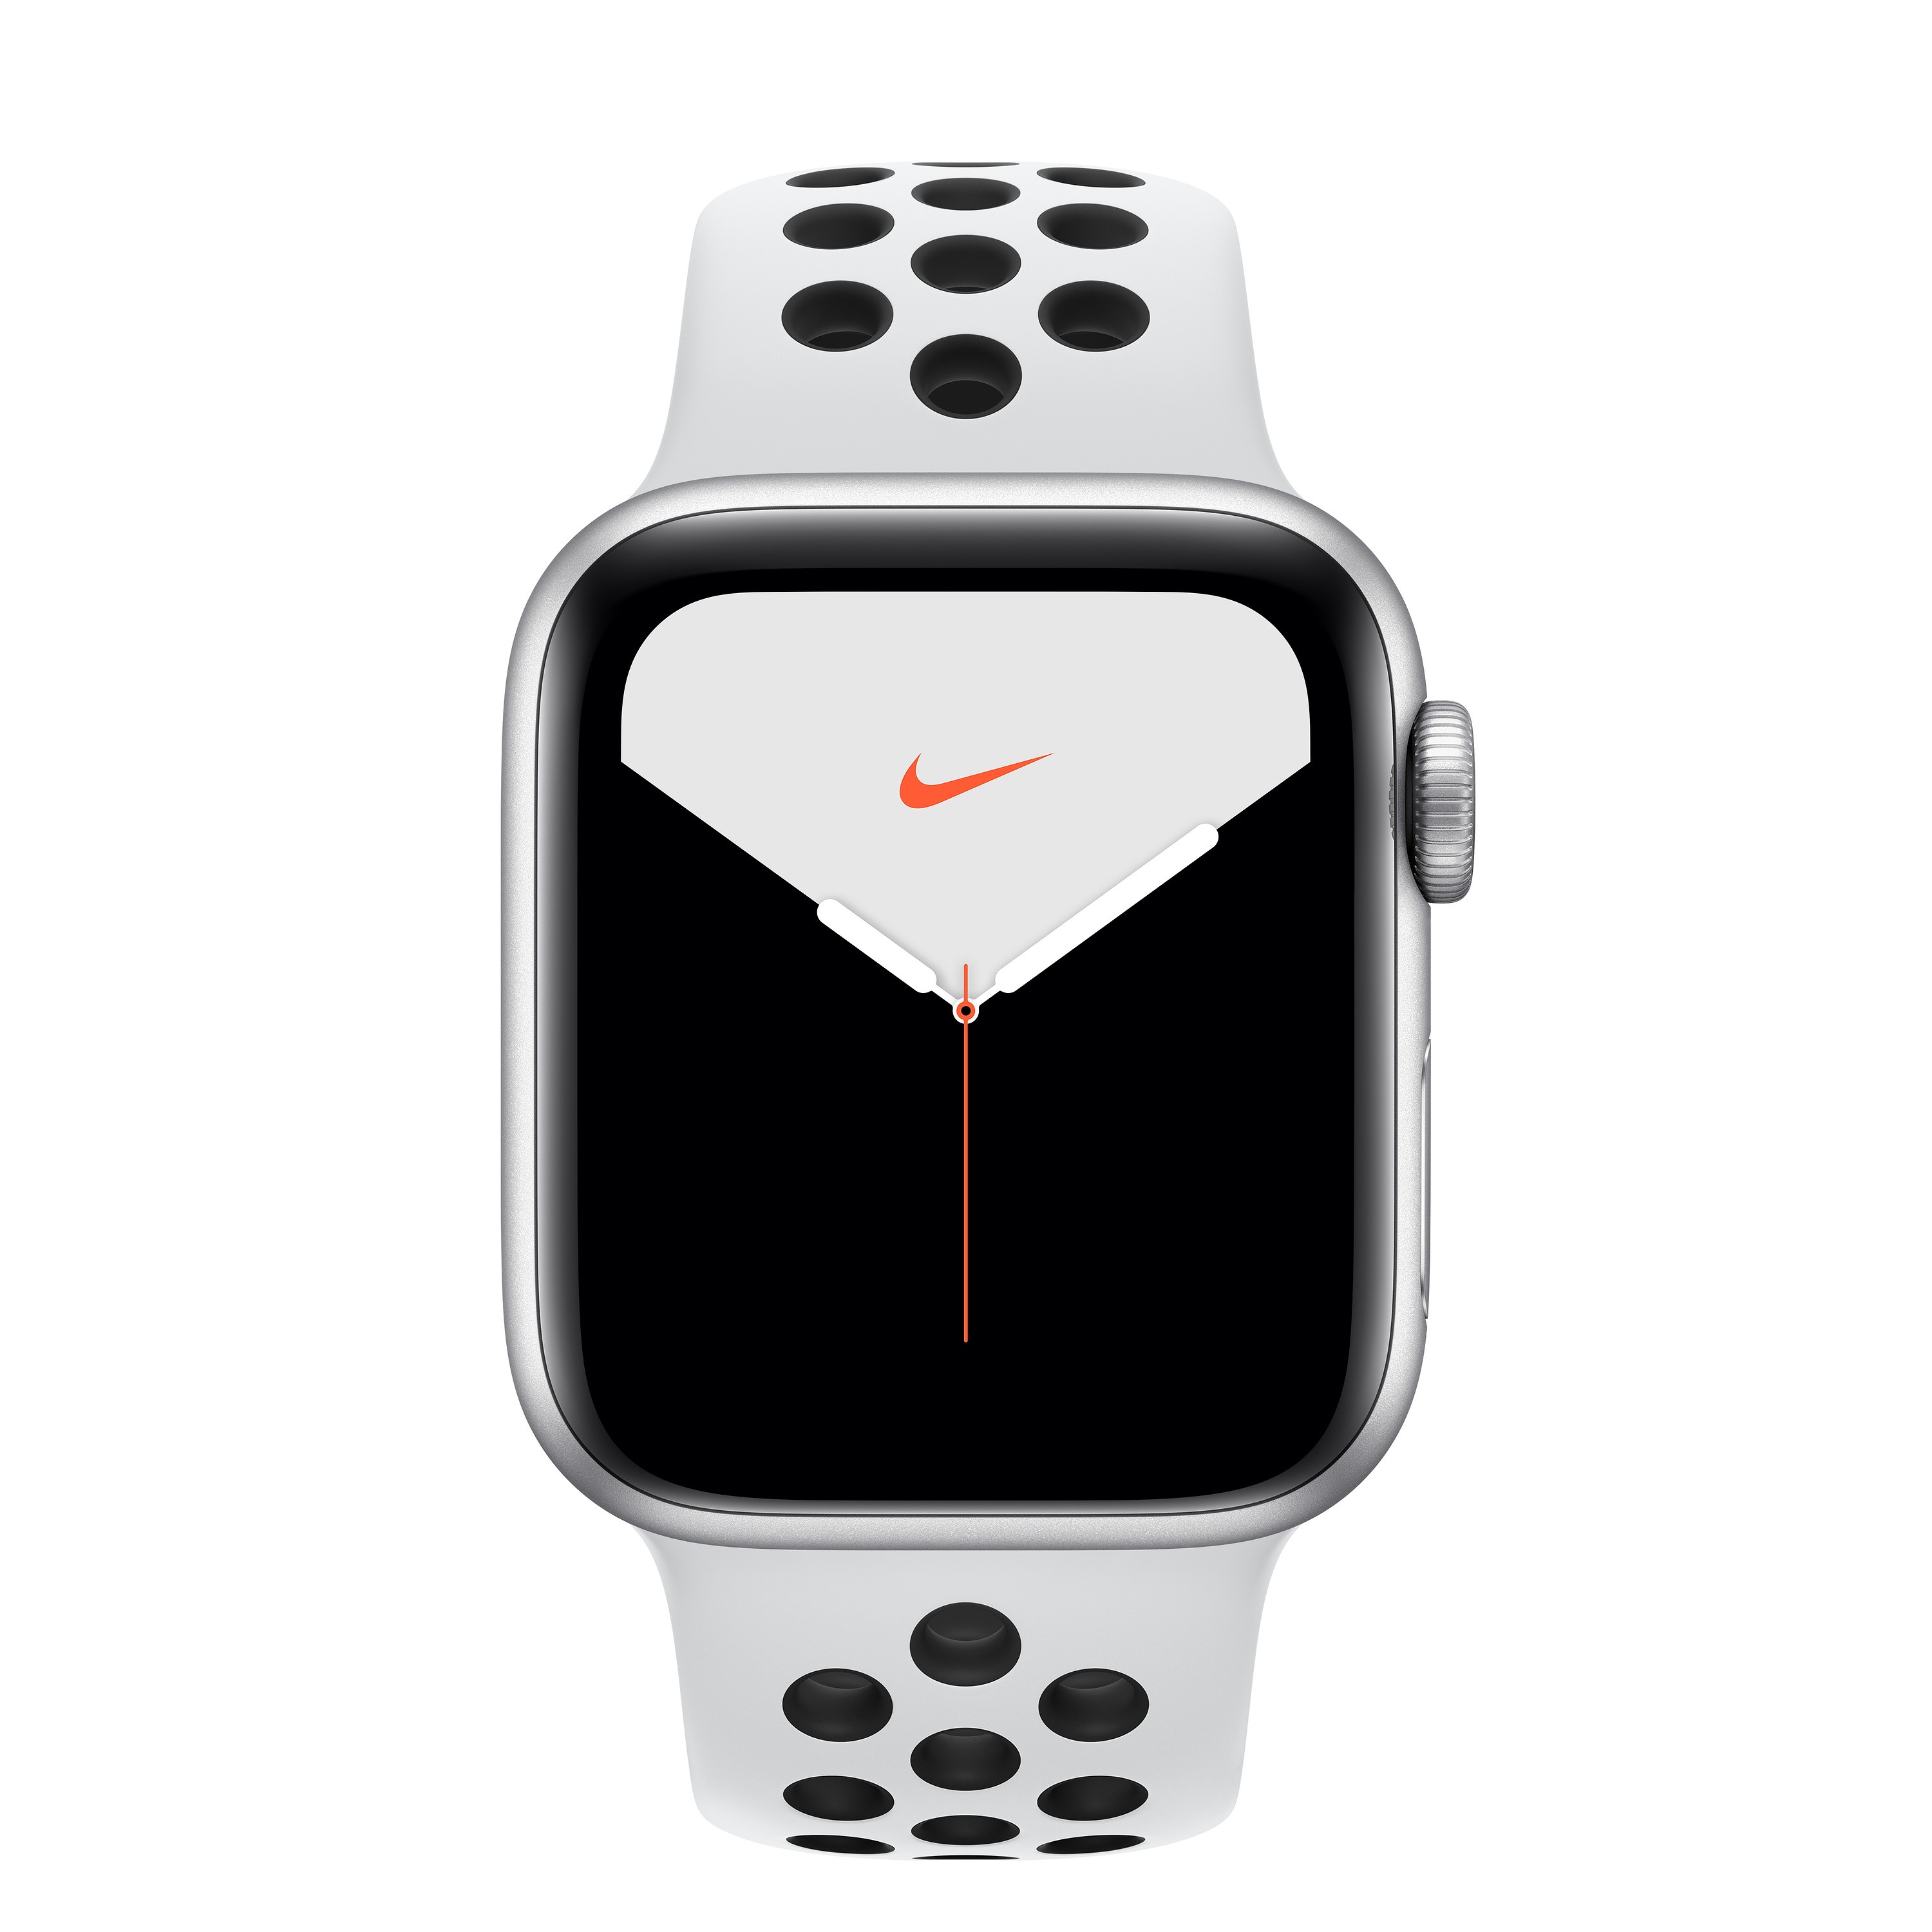 Negar Por favor mira arco Apple Watch Nike Series 5 reloj inteligente Plata OLED Móvil GPS (satélite)  mx3c2ty/a - ProComponentes